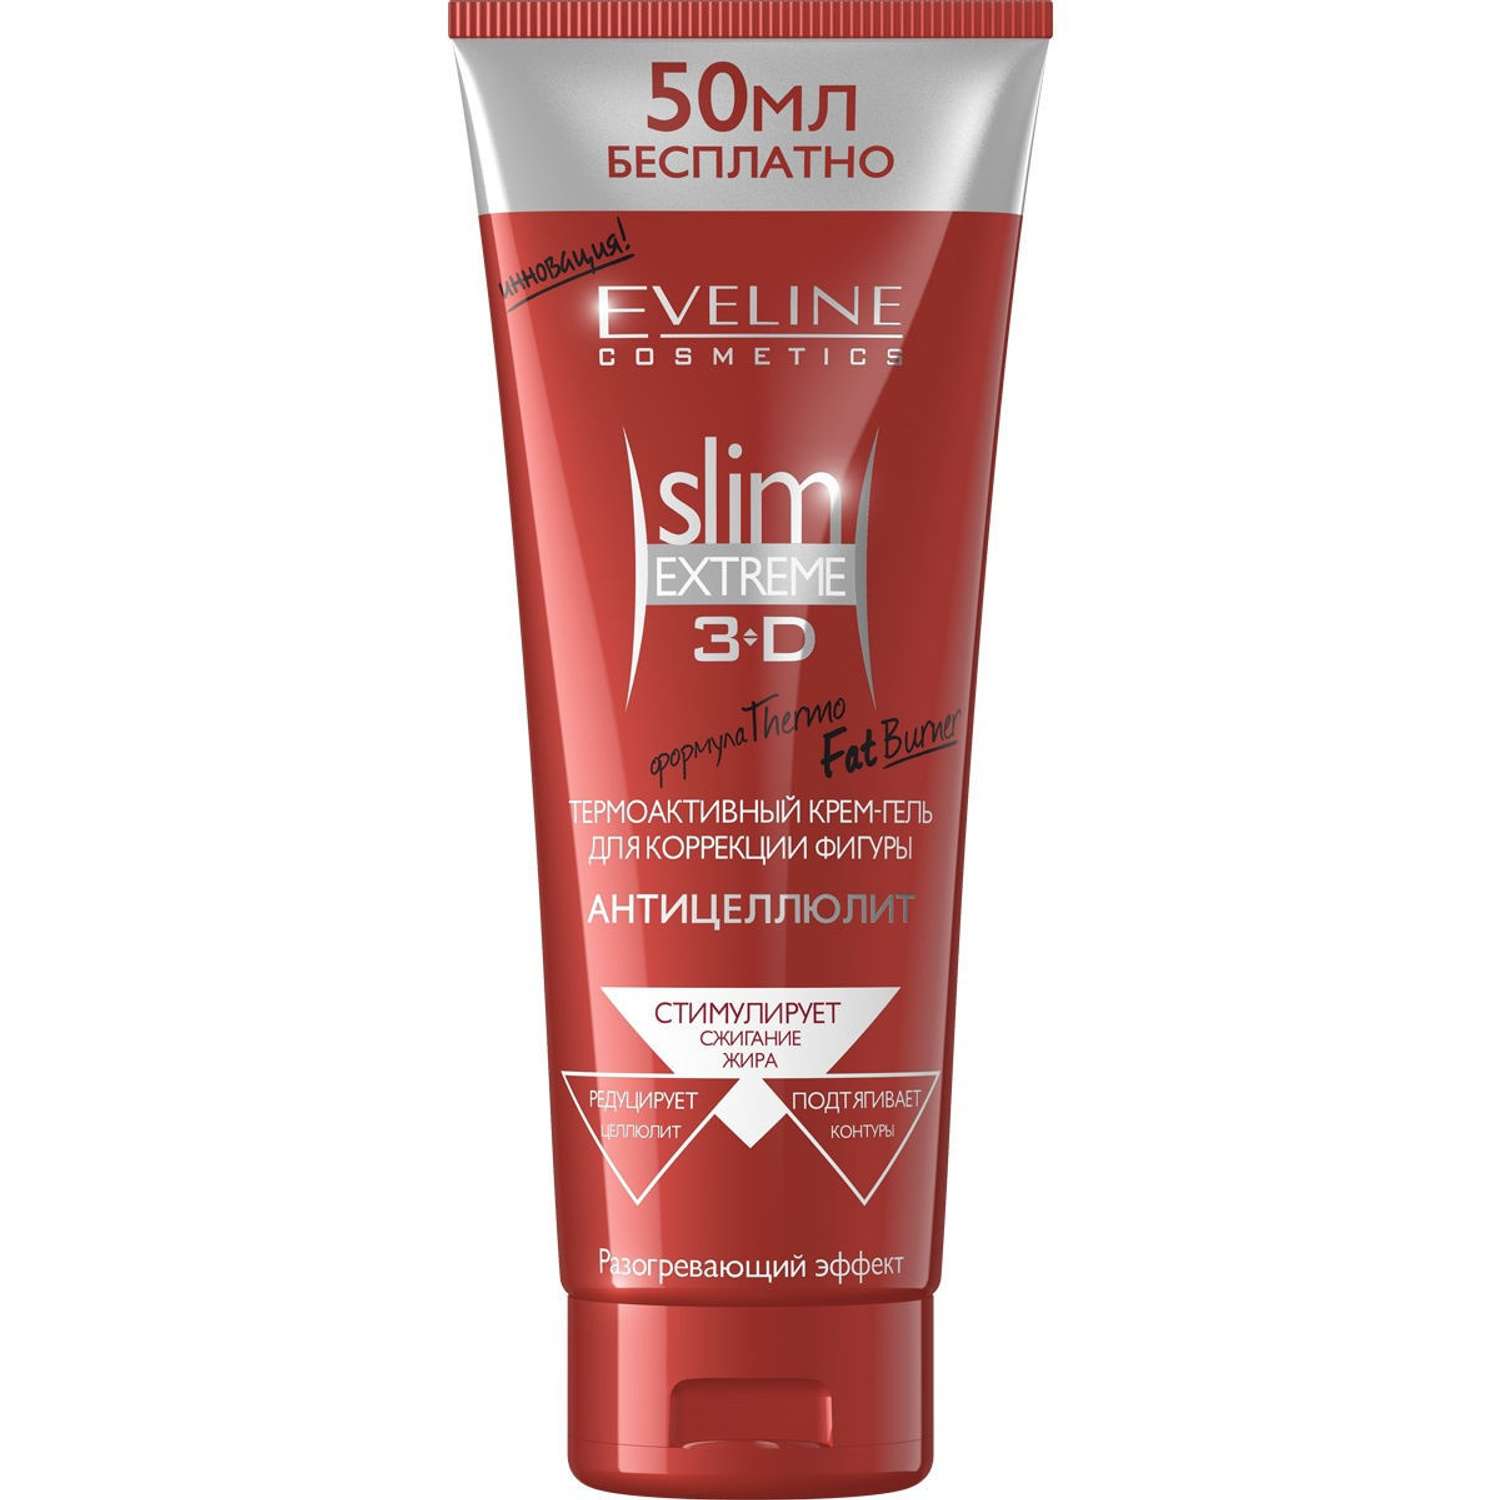 Гель EVELINE Термоактивный для коррекции фигуры Slim Extreme 3D 250мл - фото 1